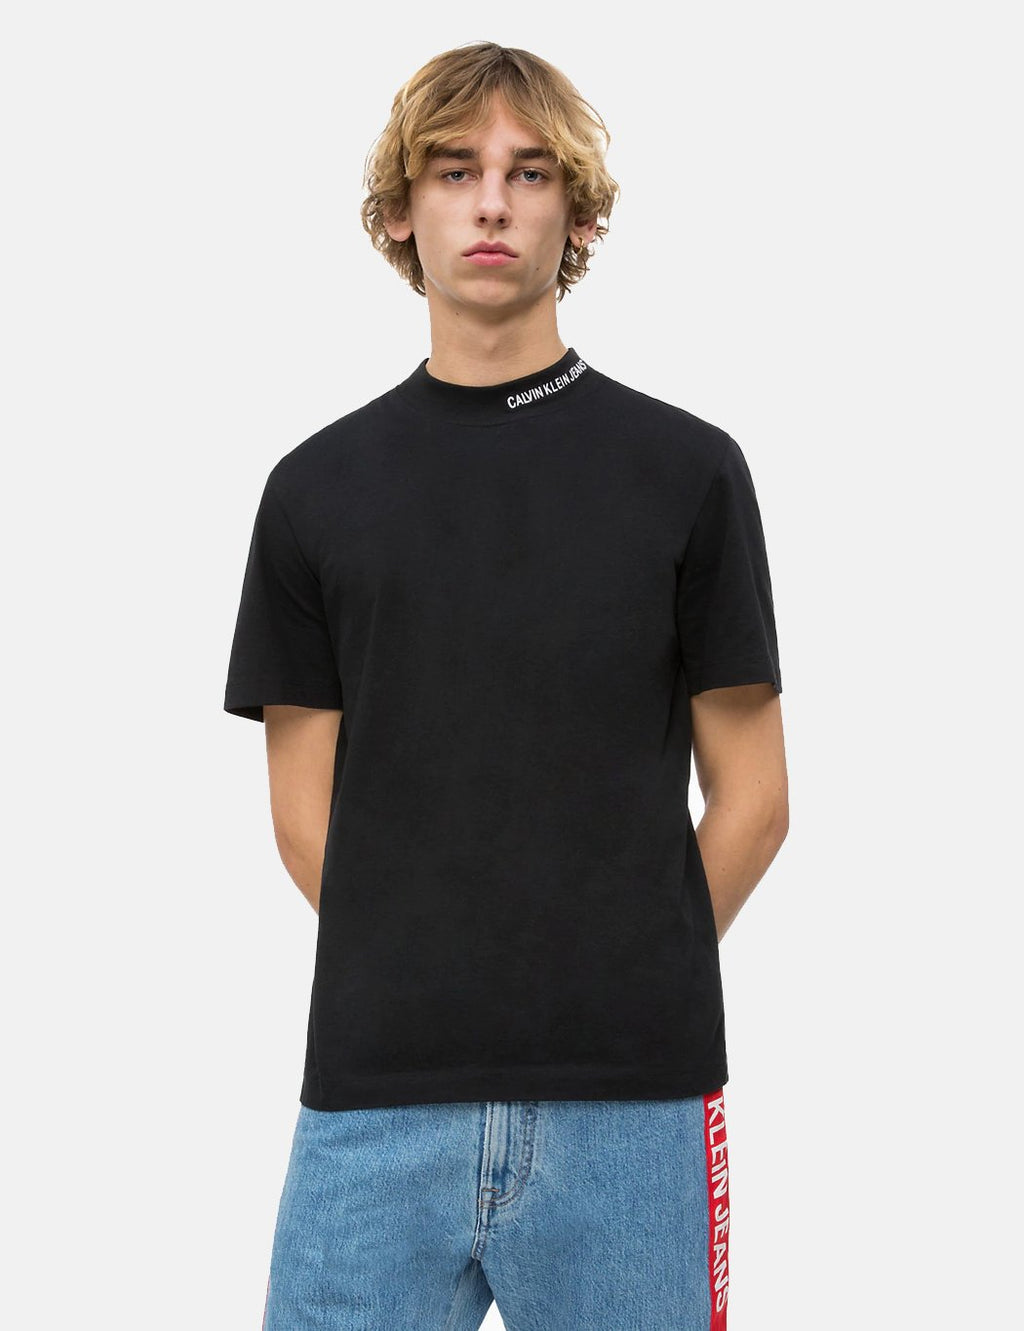 EXCESS T-Shirt Calvin EXCESS. Crew Black - USA – | URBAN Neck URBAN Klein Embroidered